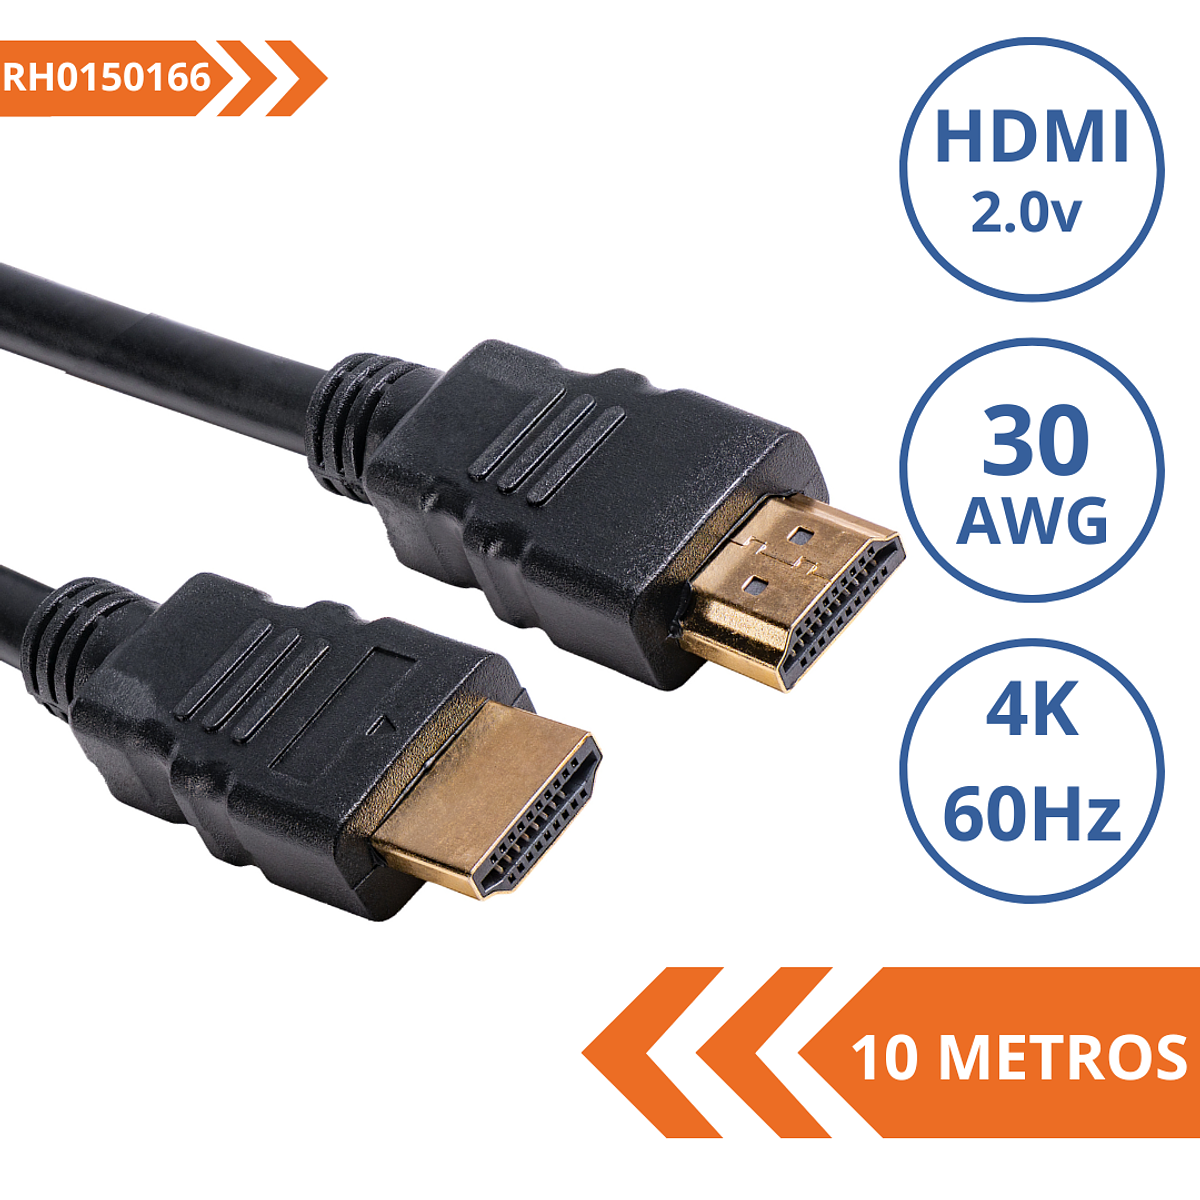 Cable HDMI 10 metros